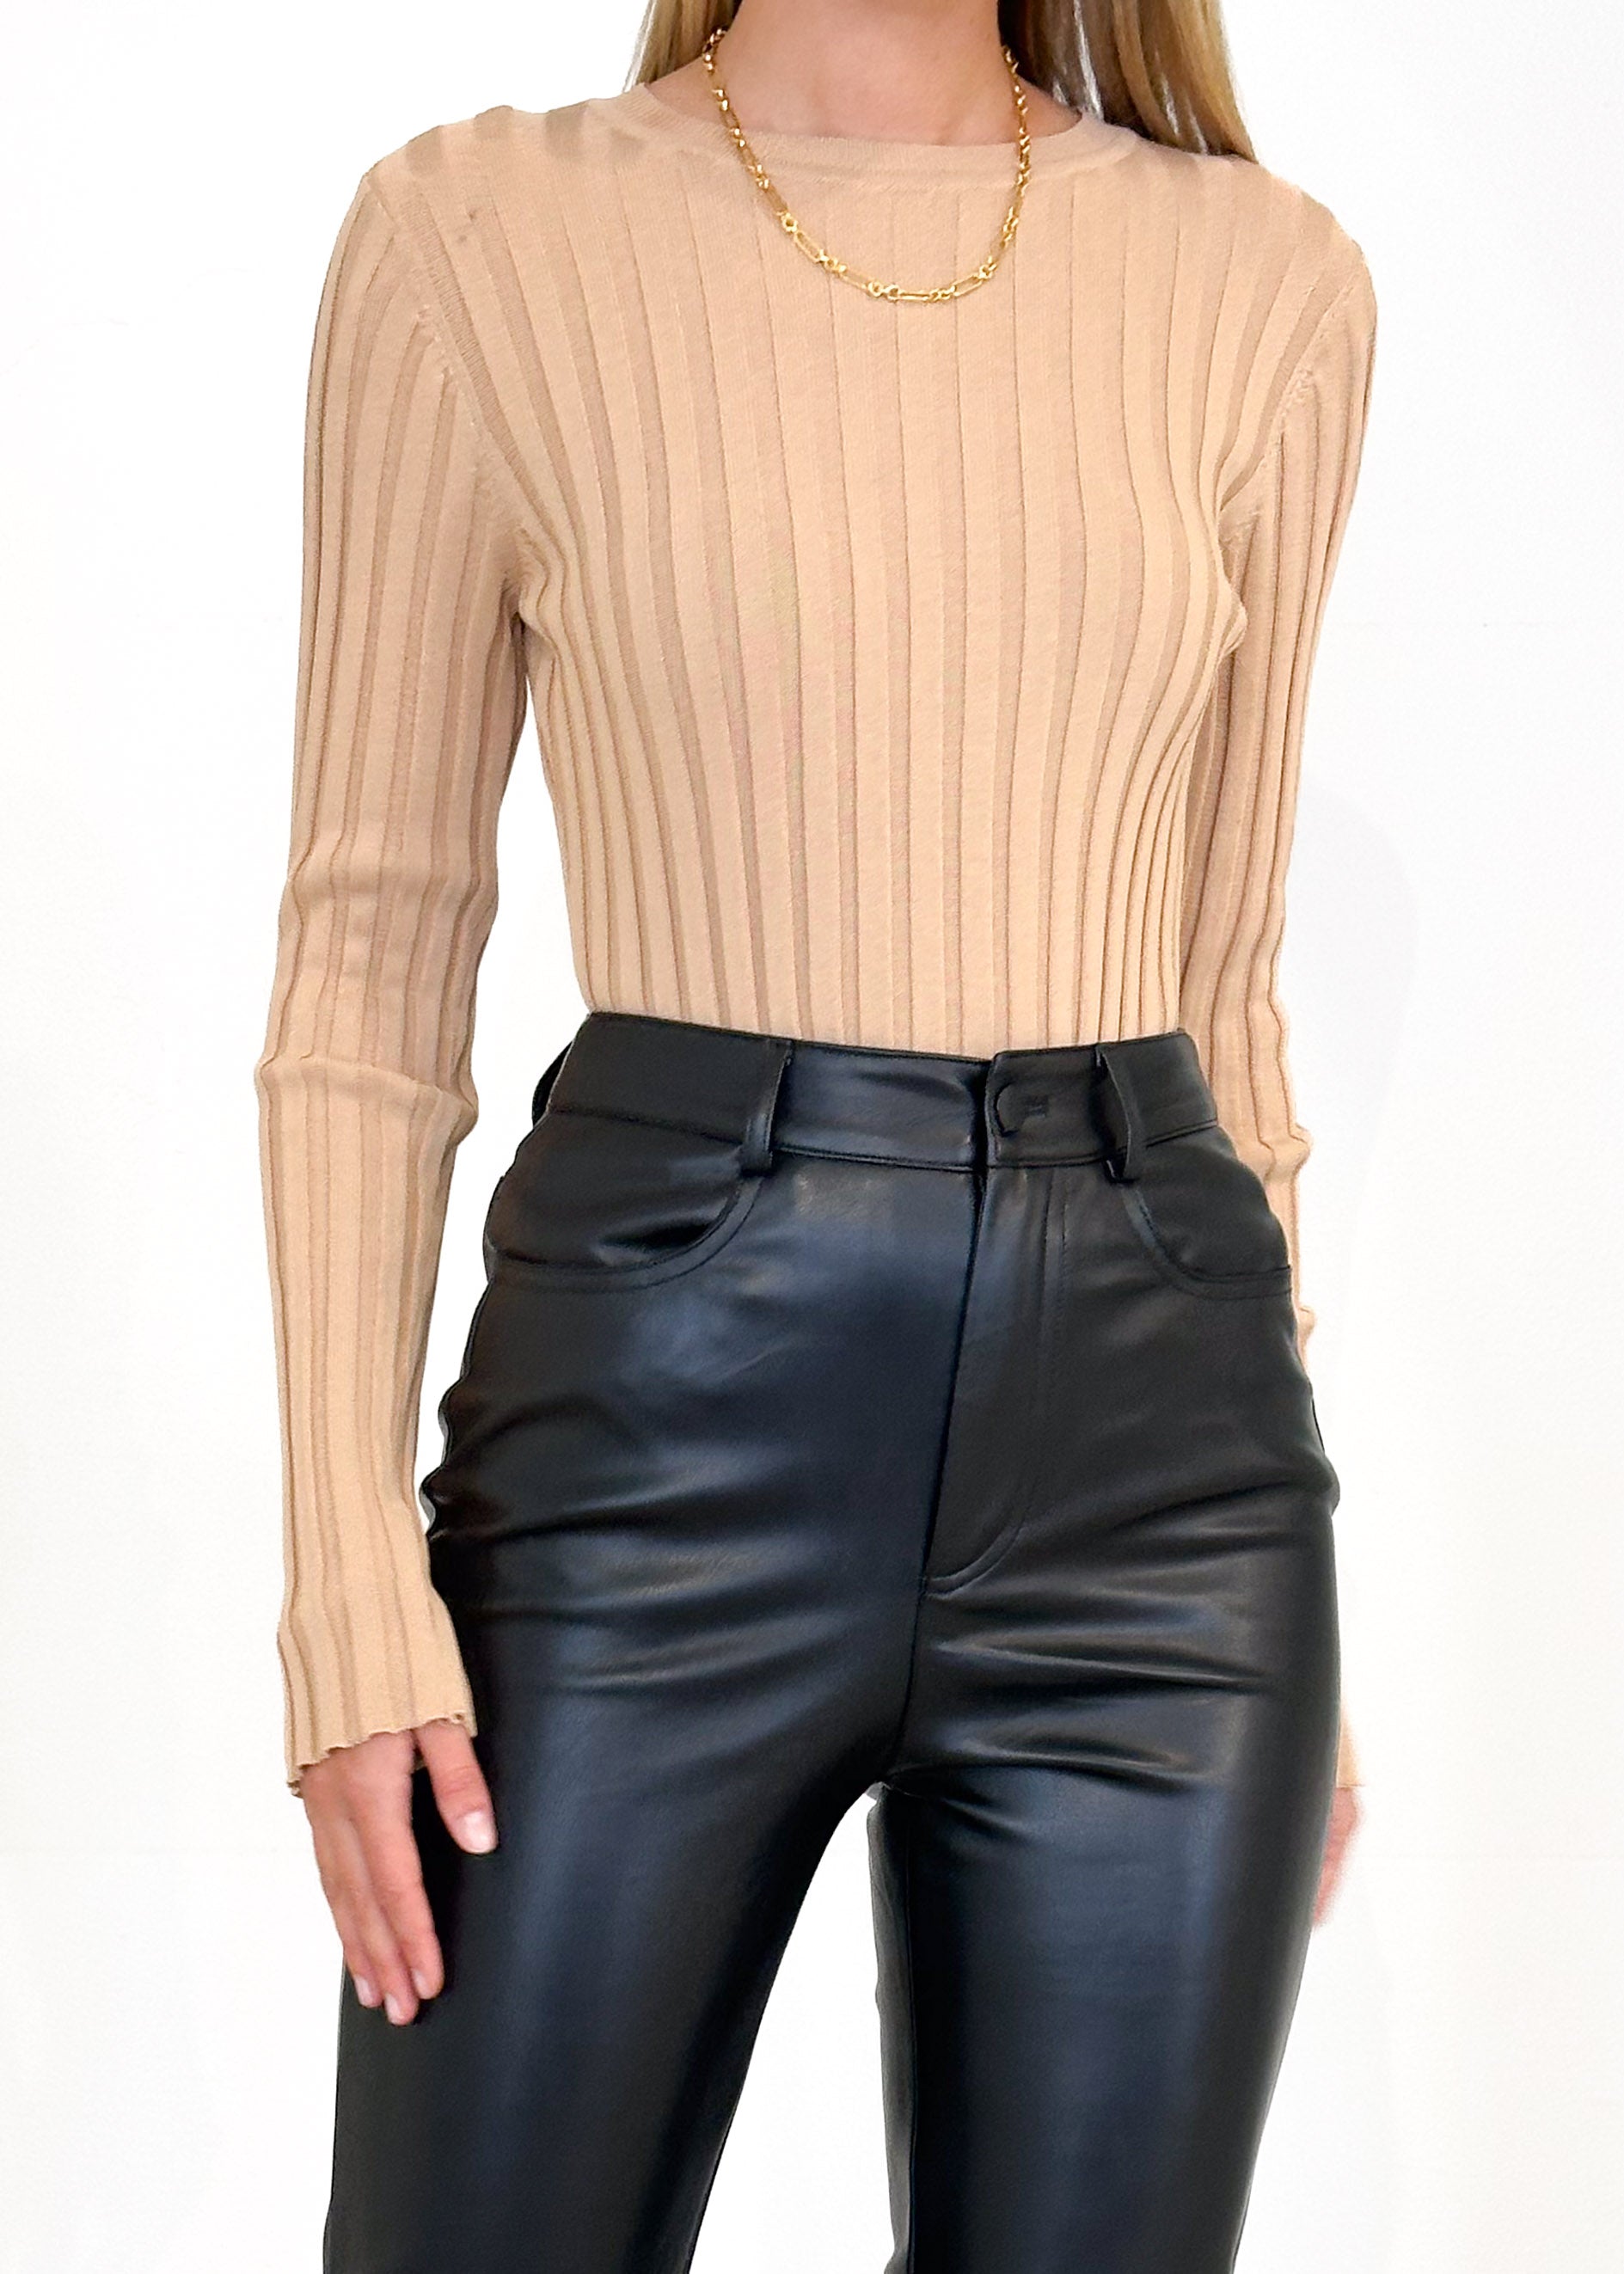 Erikah Leather Look Pants - Black